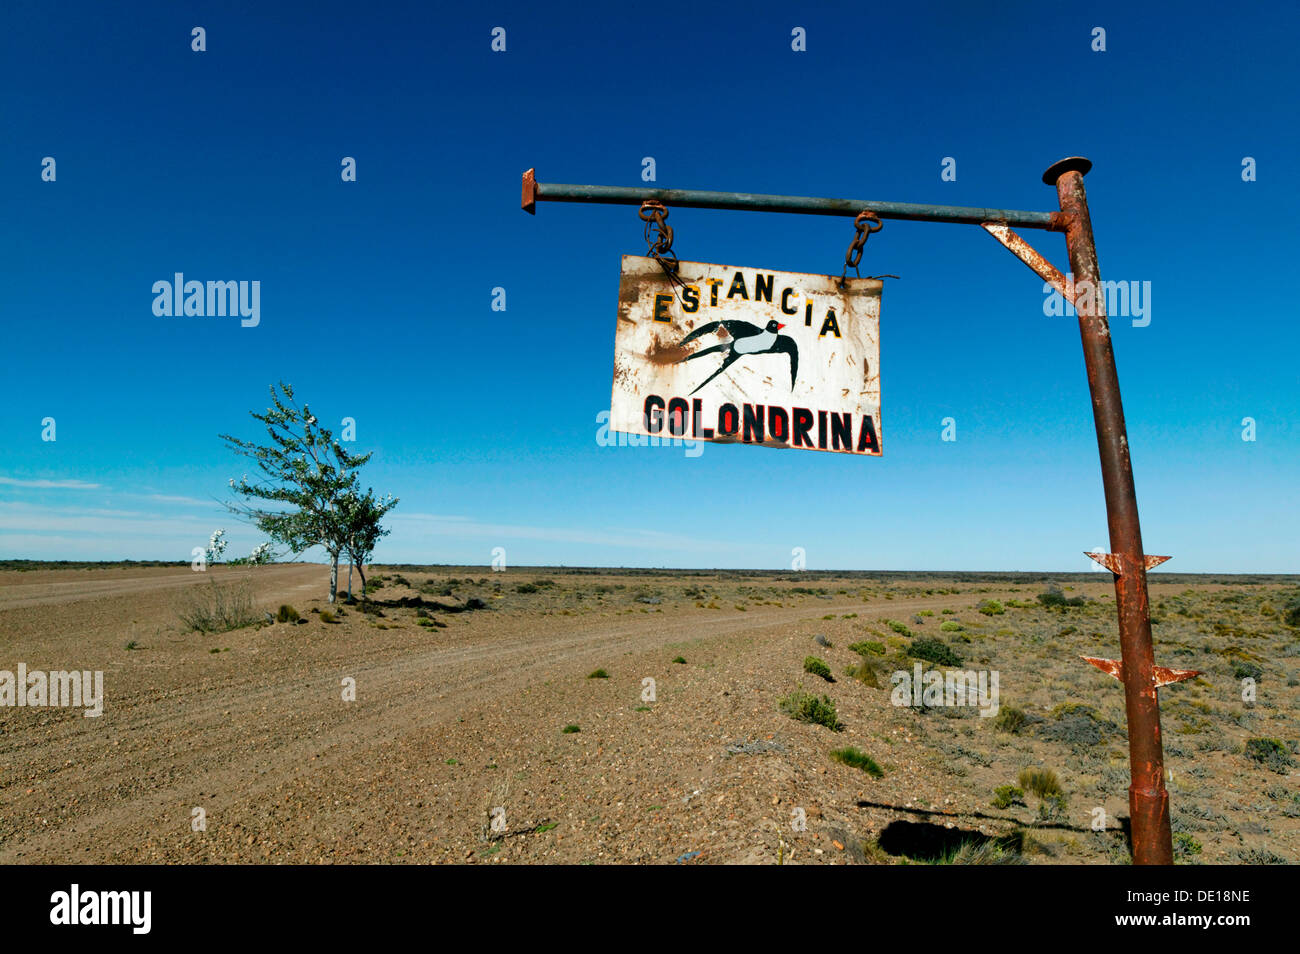 Signo de la Estancia La Golondrina, provincia de Santa Cruz, Patagonia Argentina, Sudamérica Foto de stock